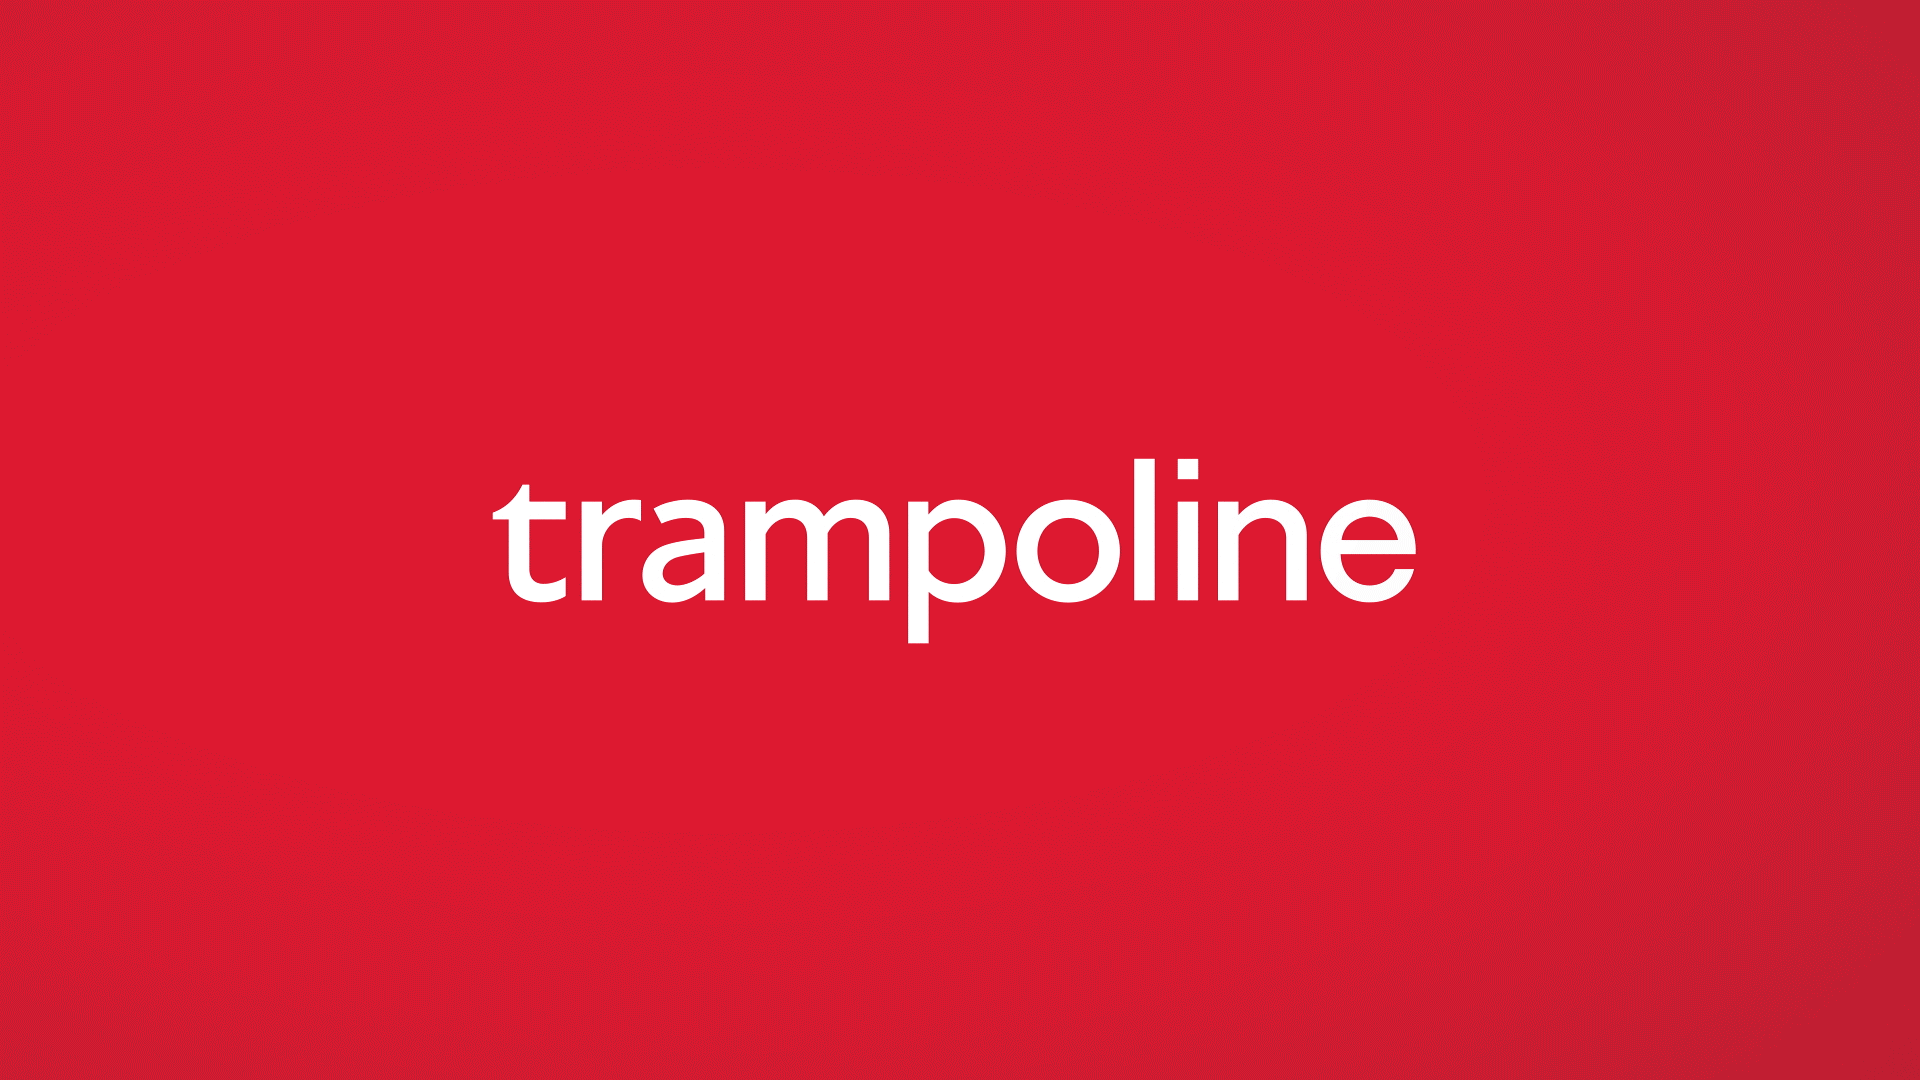 Trampoline logo gif.